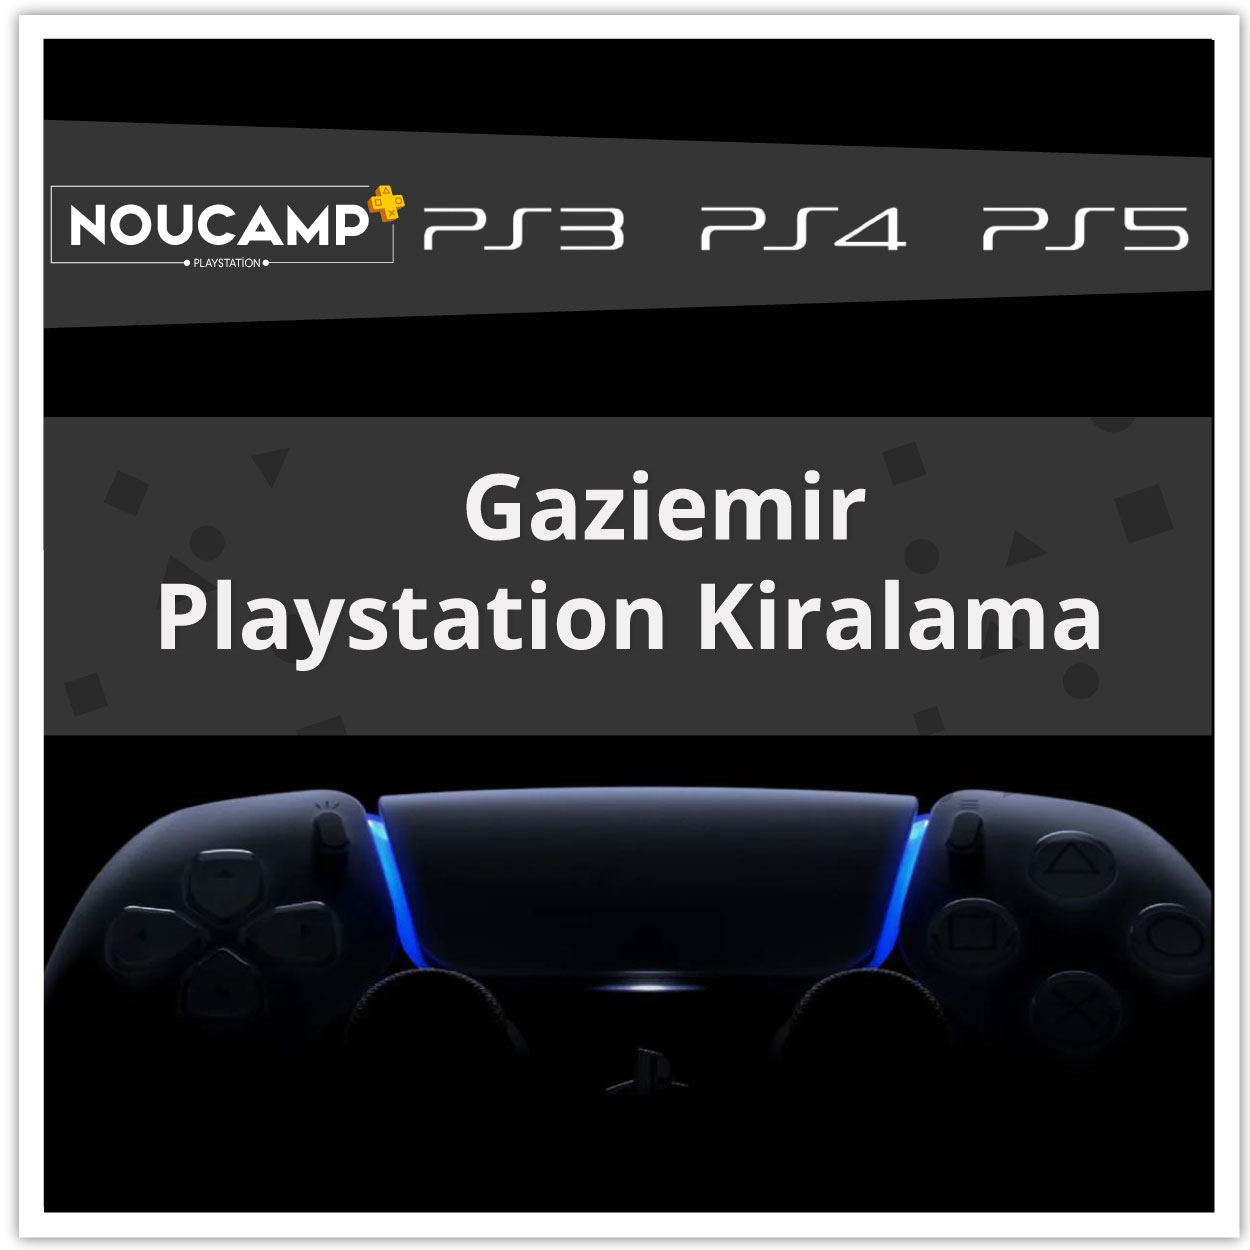 gaziemir-playstation-kiralama